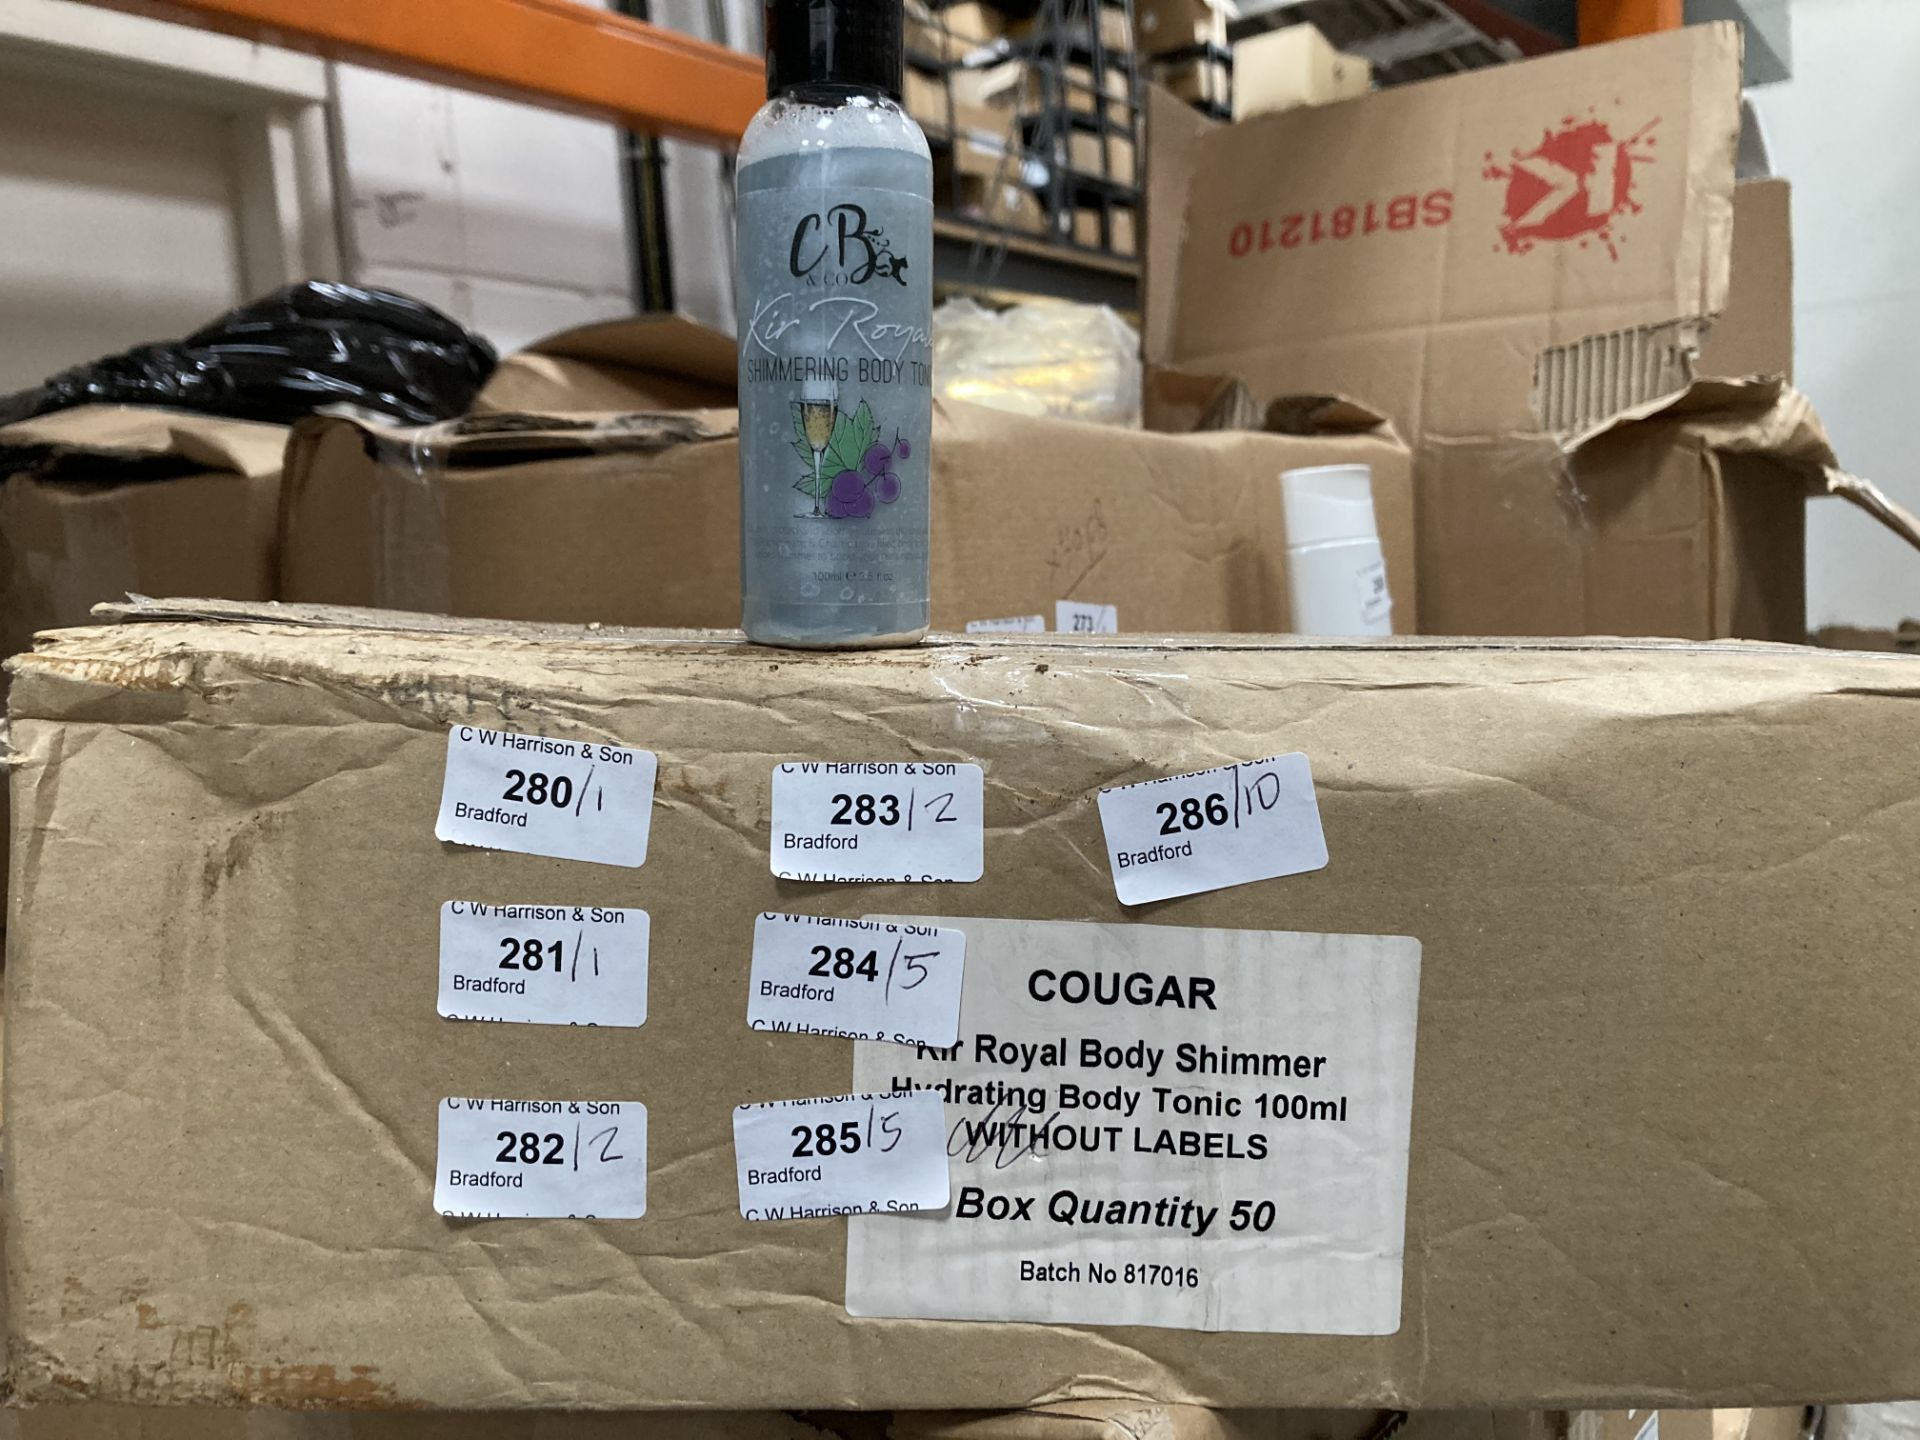 Two boxes of Cougar Kir Royal body shimmer hydrating body tonic 100ml (50 units per box)